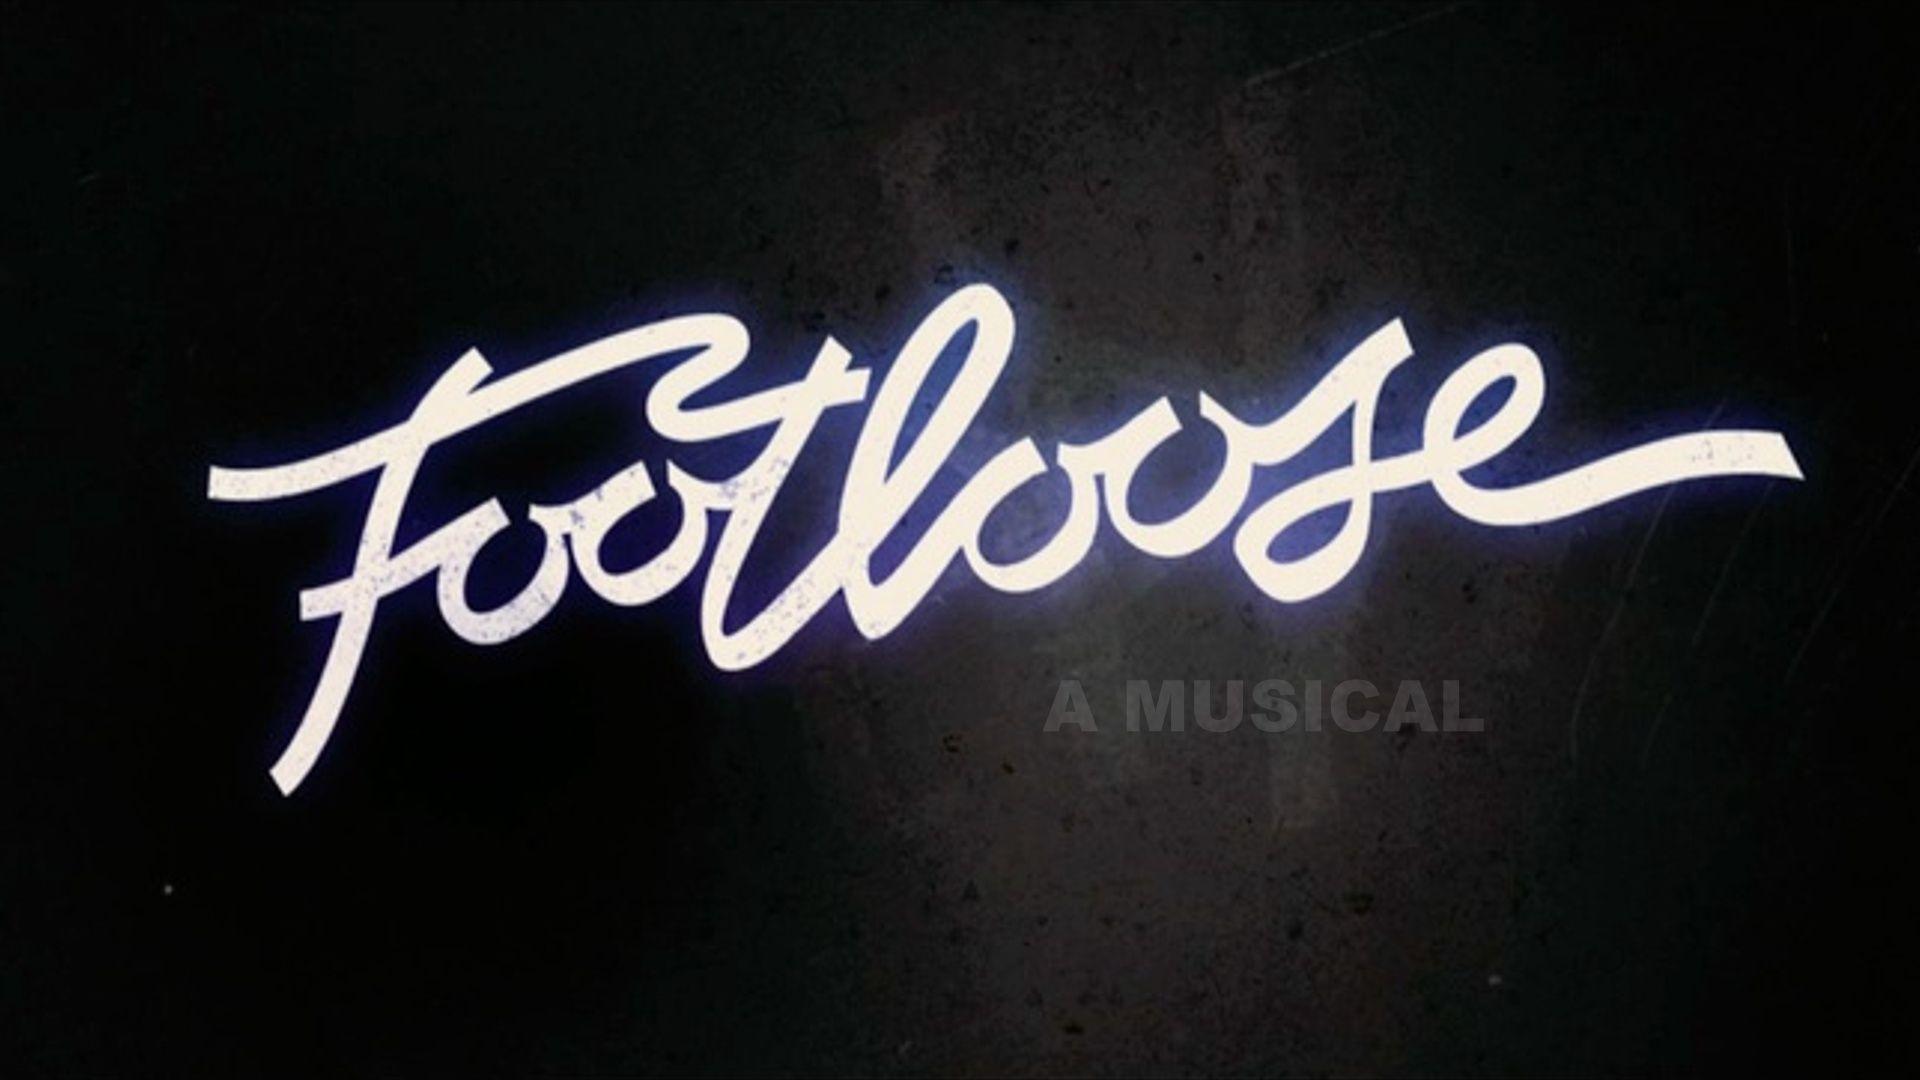 Footloose Logo - Footloose